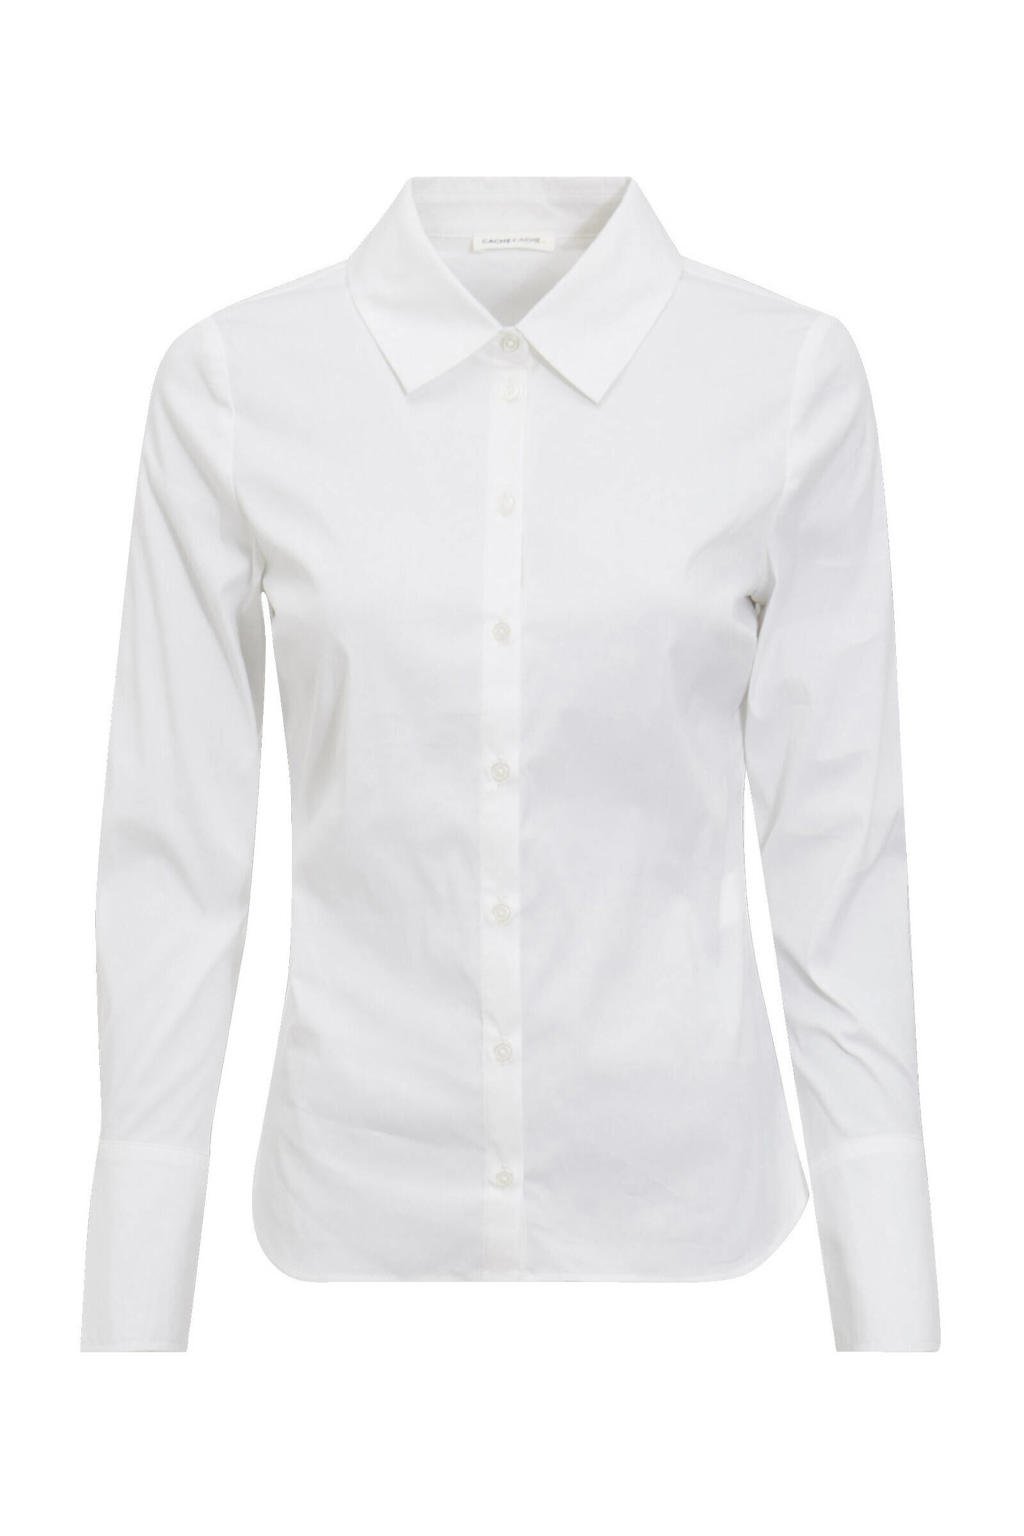 Witte dames Cache Cache blouse van stretchkatoen met lange mouwen, klassieke kraag en knoopsluiting